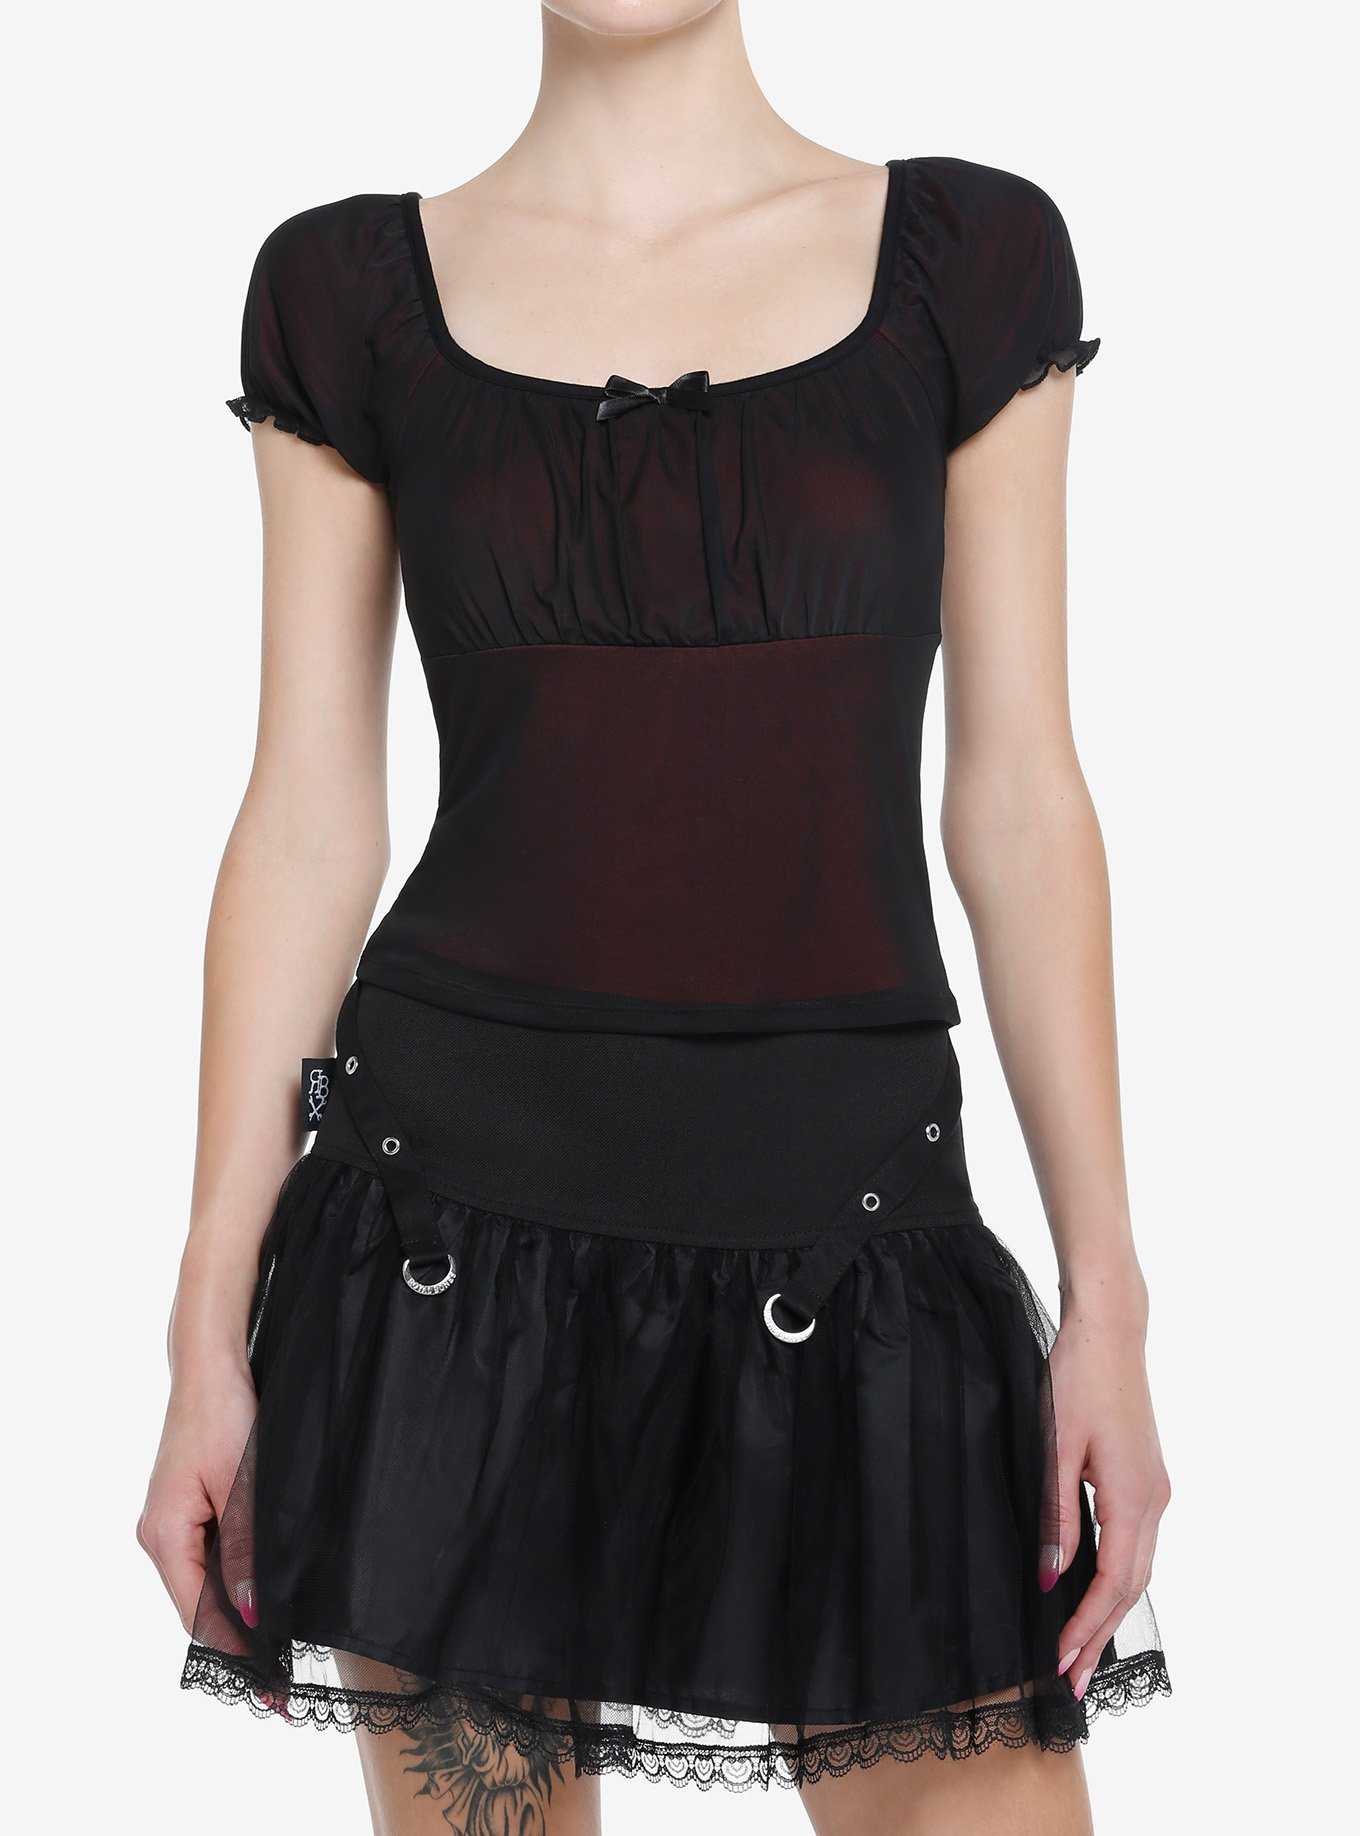 Skirt Dress Gothic Straps Corset Tube Top Dress Retro High Waist Clothes  Present